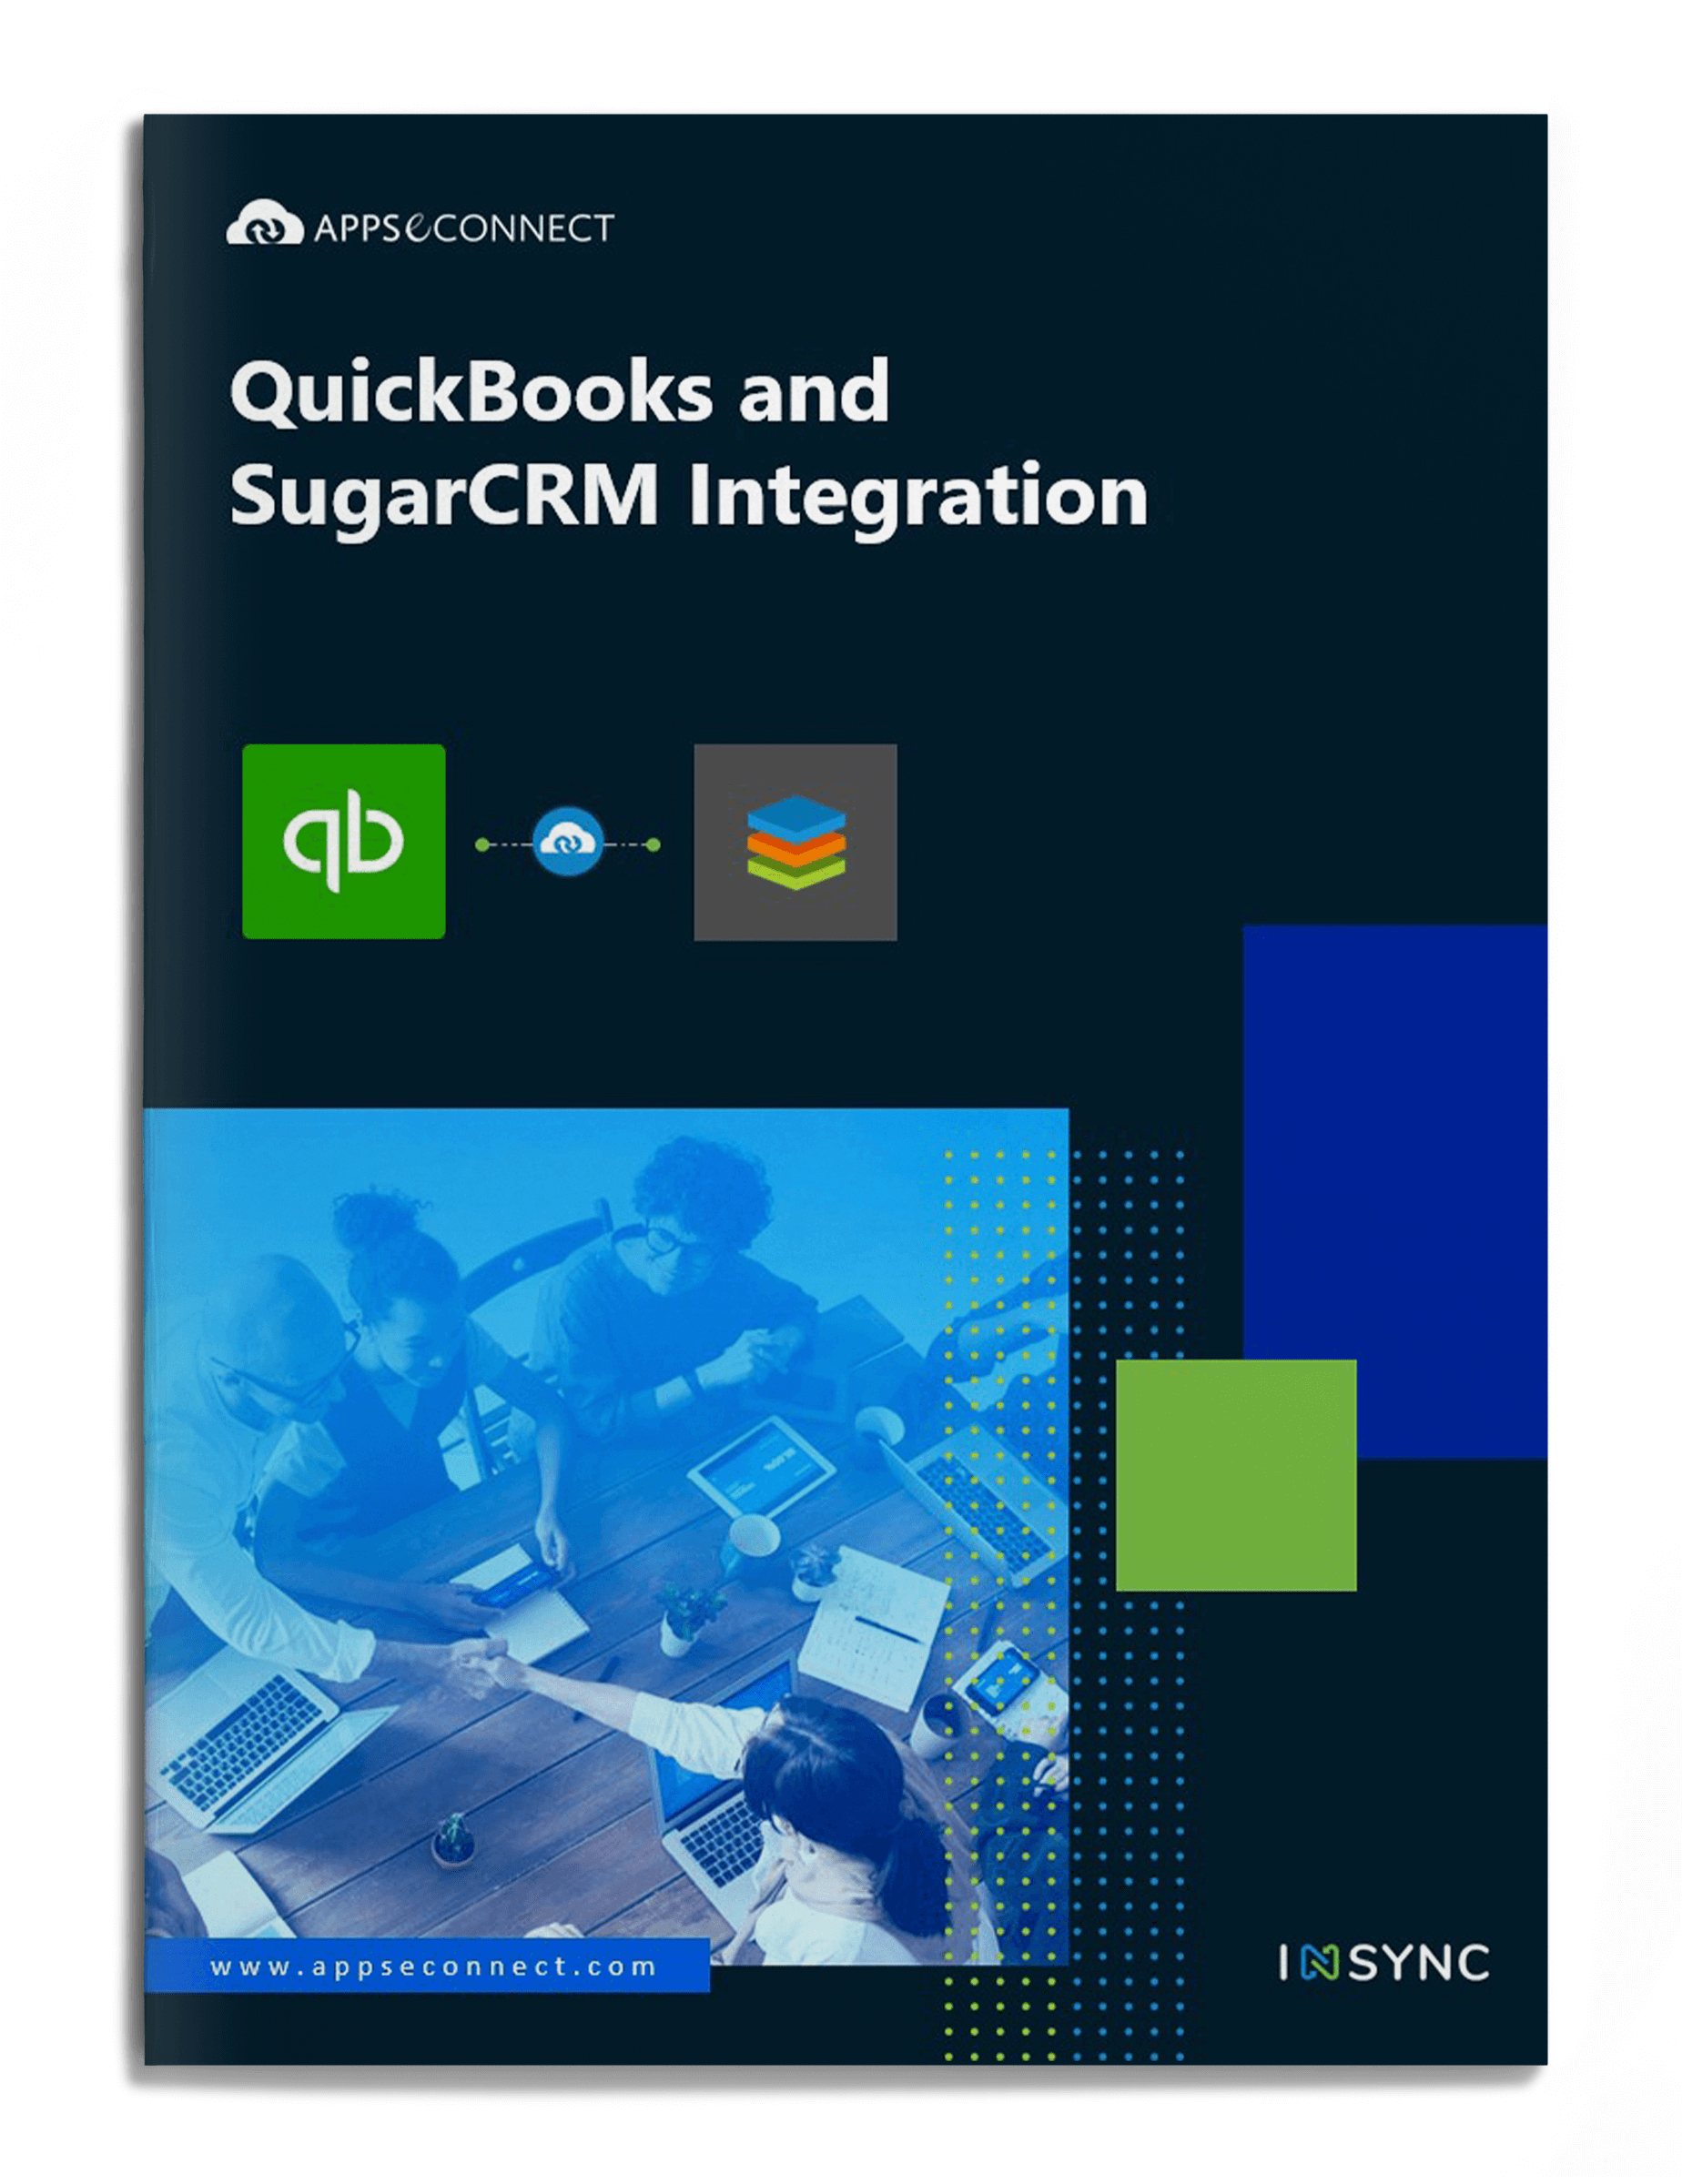 quickbooks-sugar-crm-integration-brochure-cover